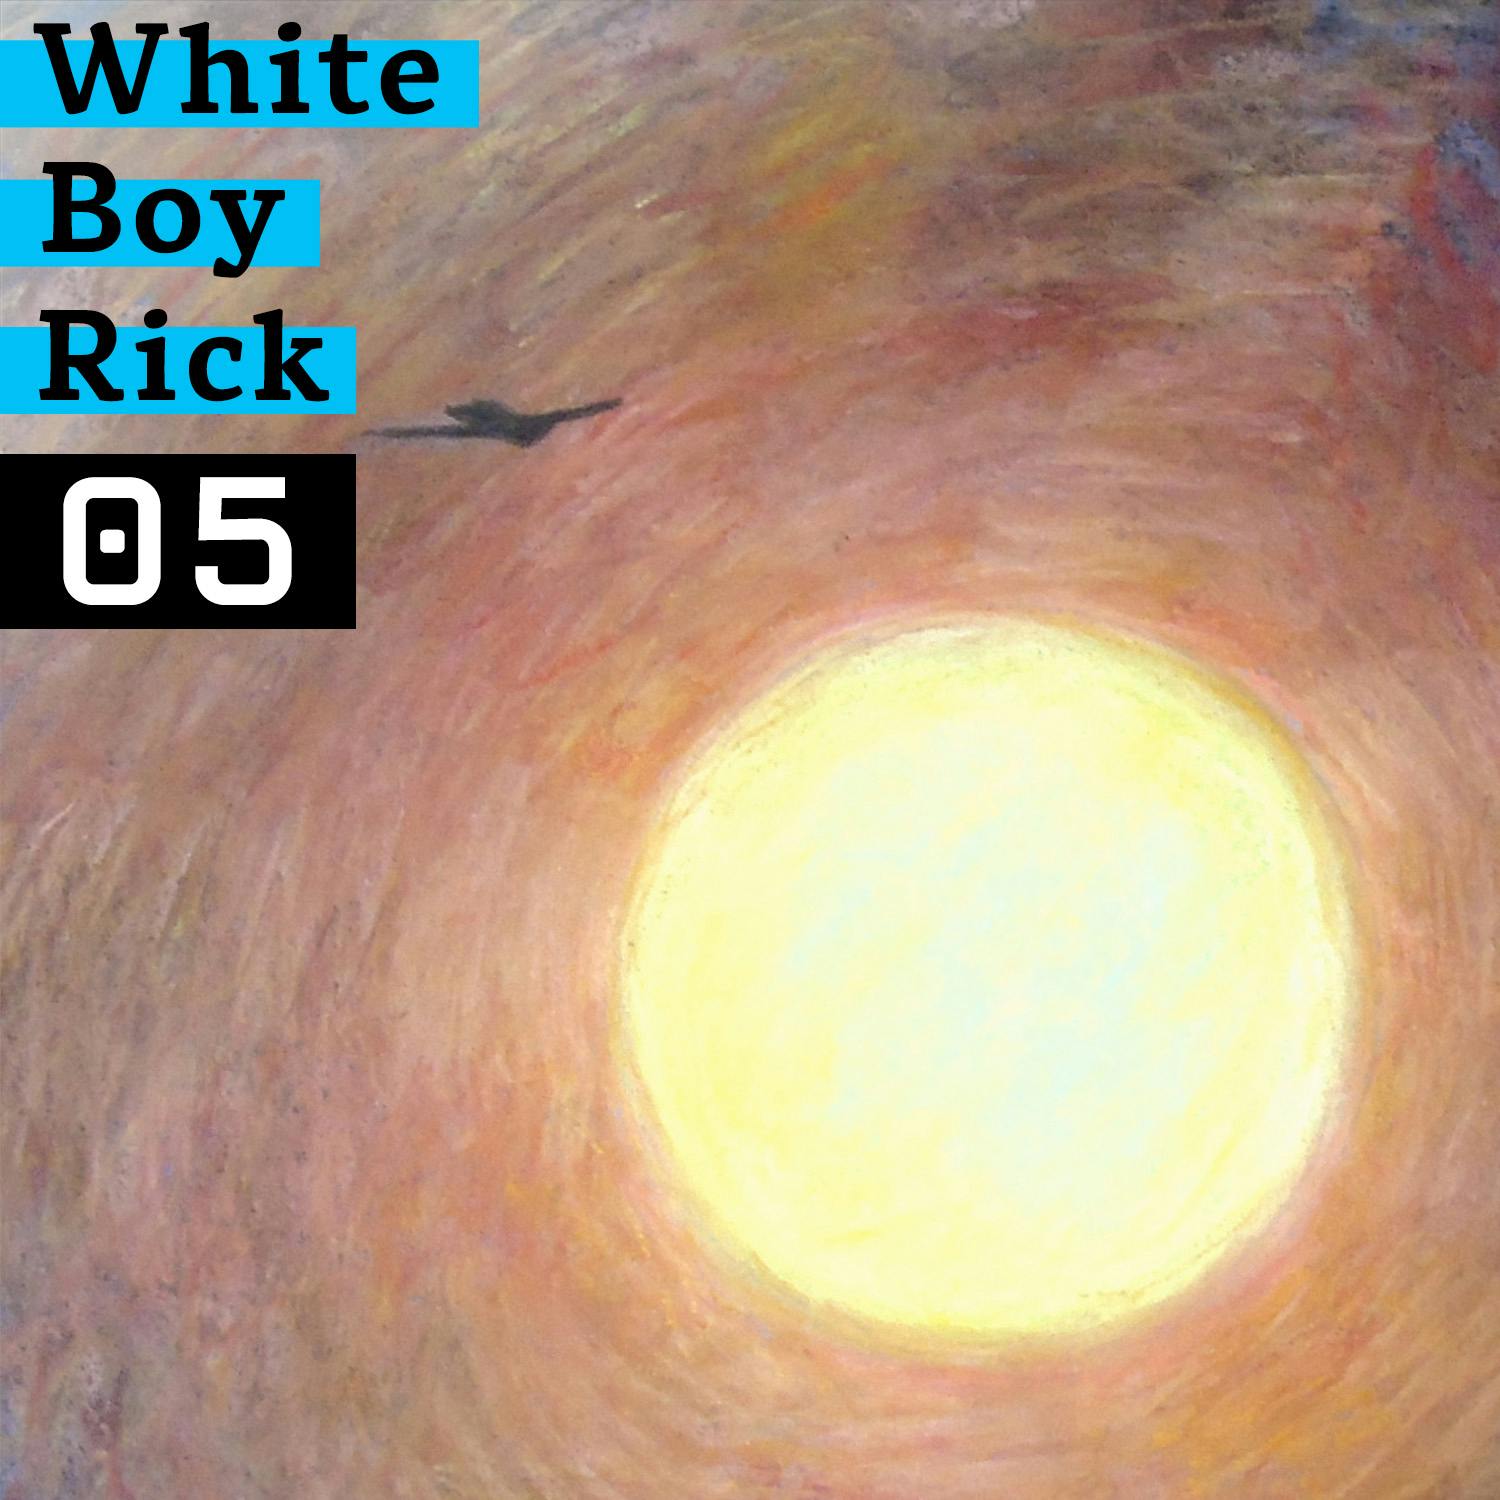 White Boy Rick, Chapter 5 – Operation Backbone